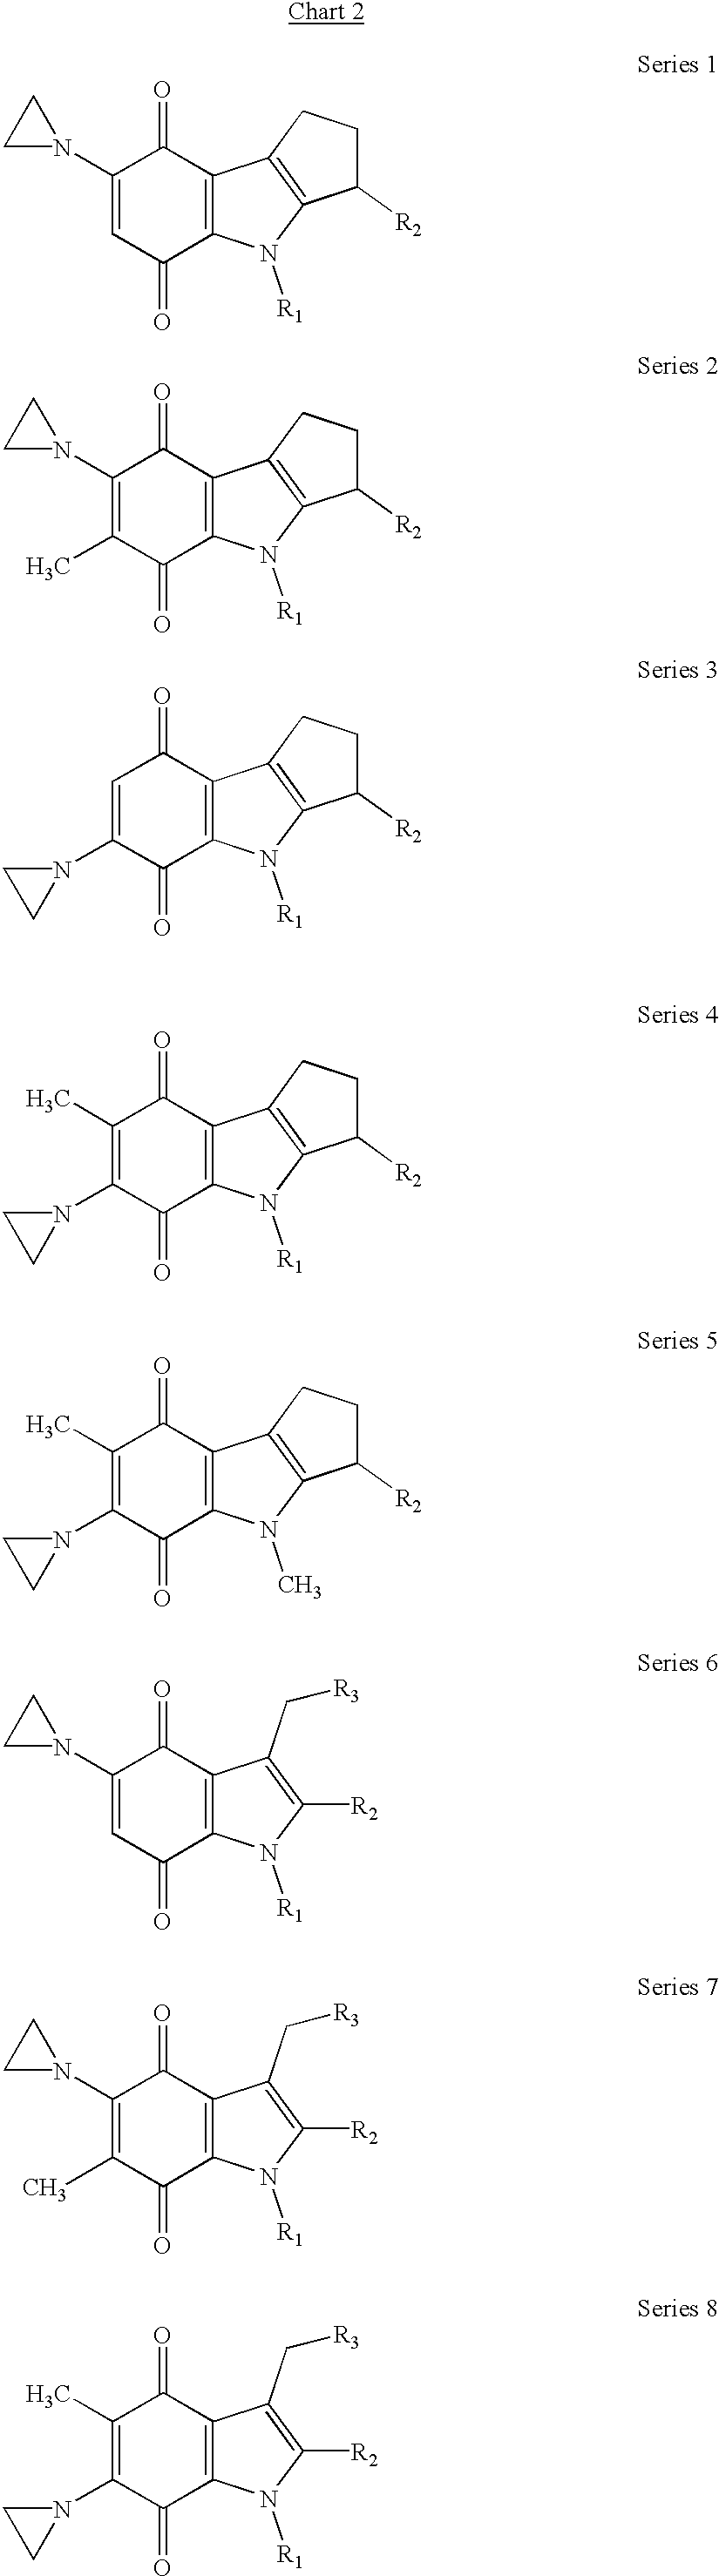 Aziridinyl quinone antitumor agents based on indoles and cyclopent[b]indoles